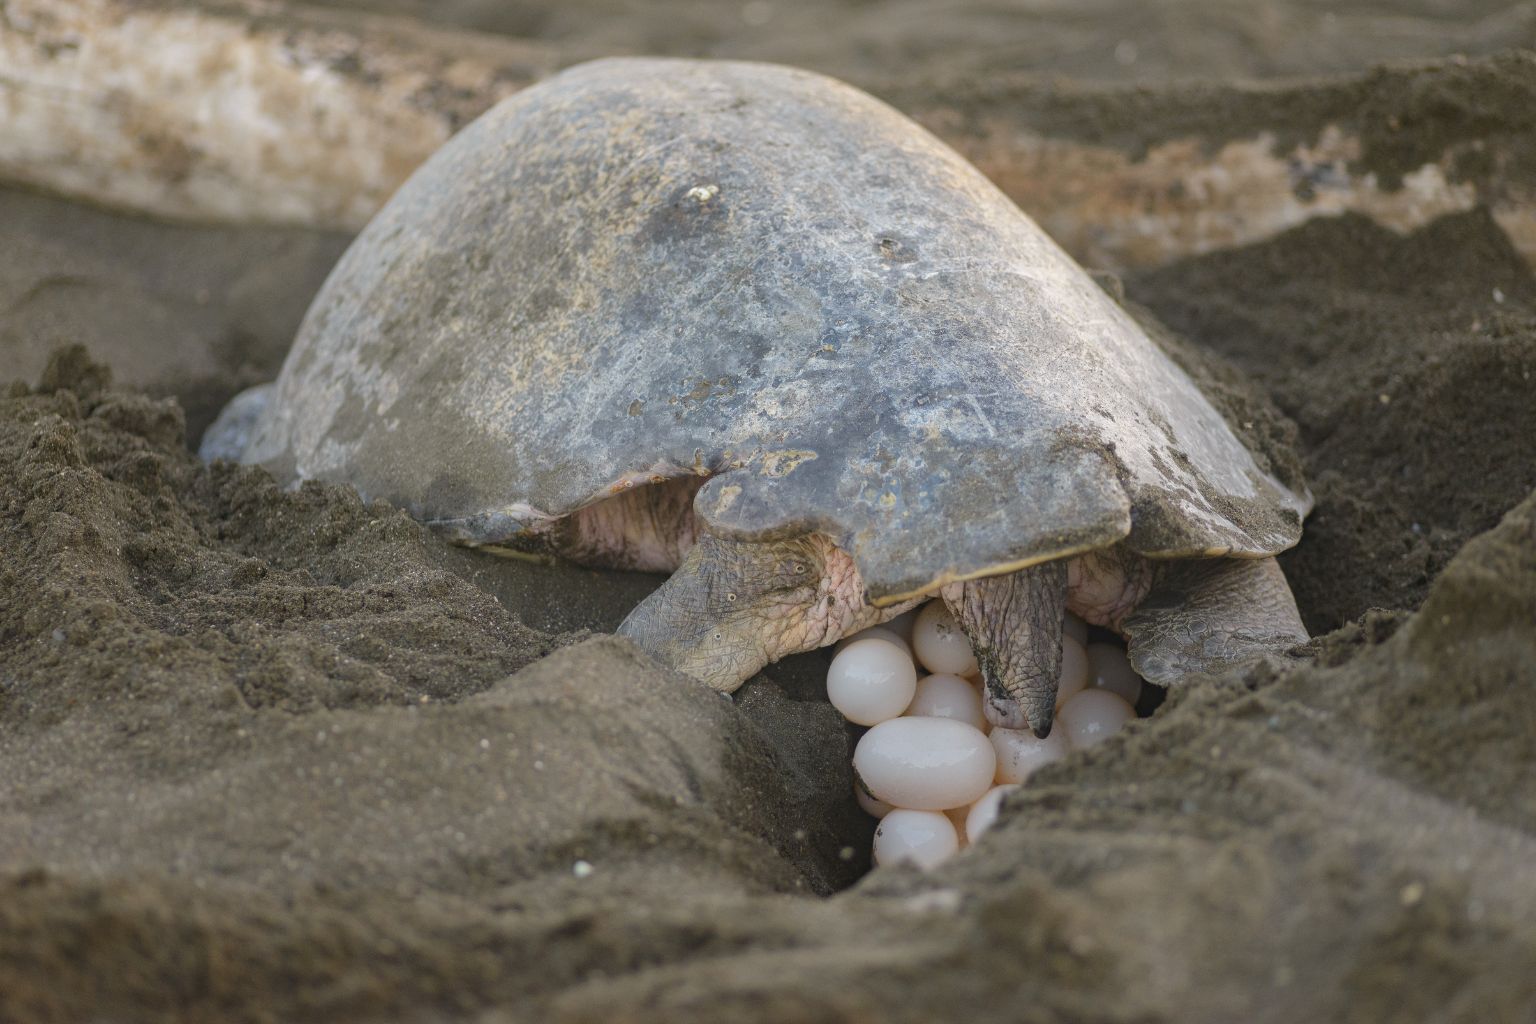 karnataka forest-department olive ridley sea turtle nesting